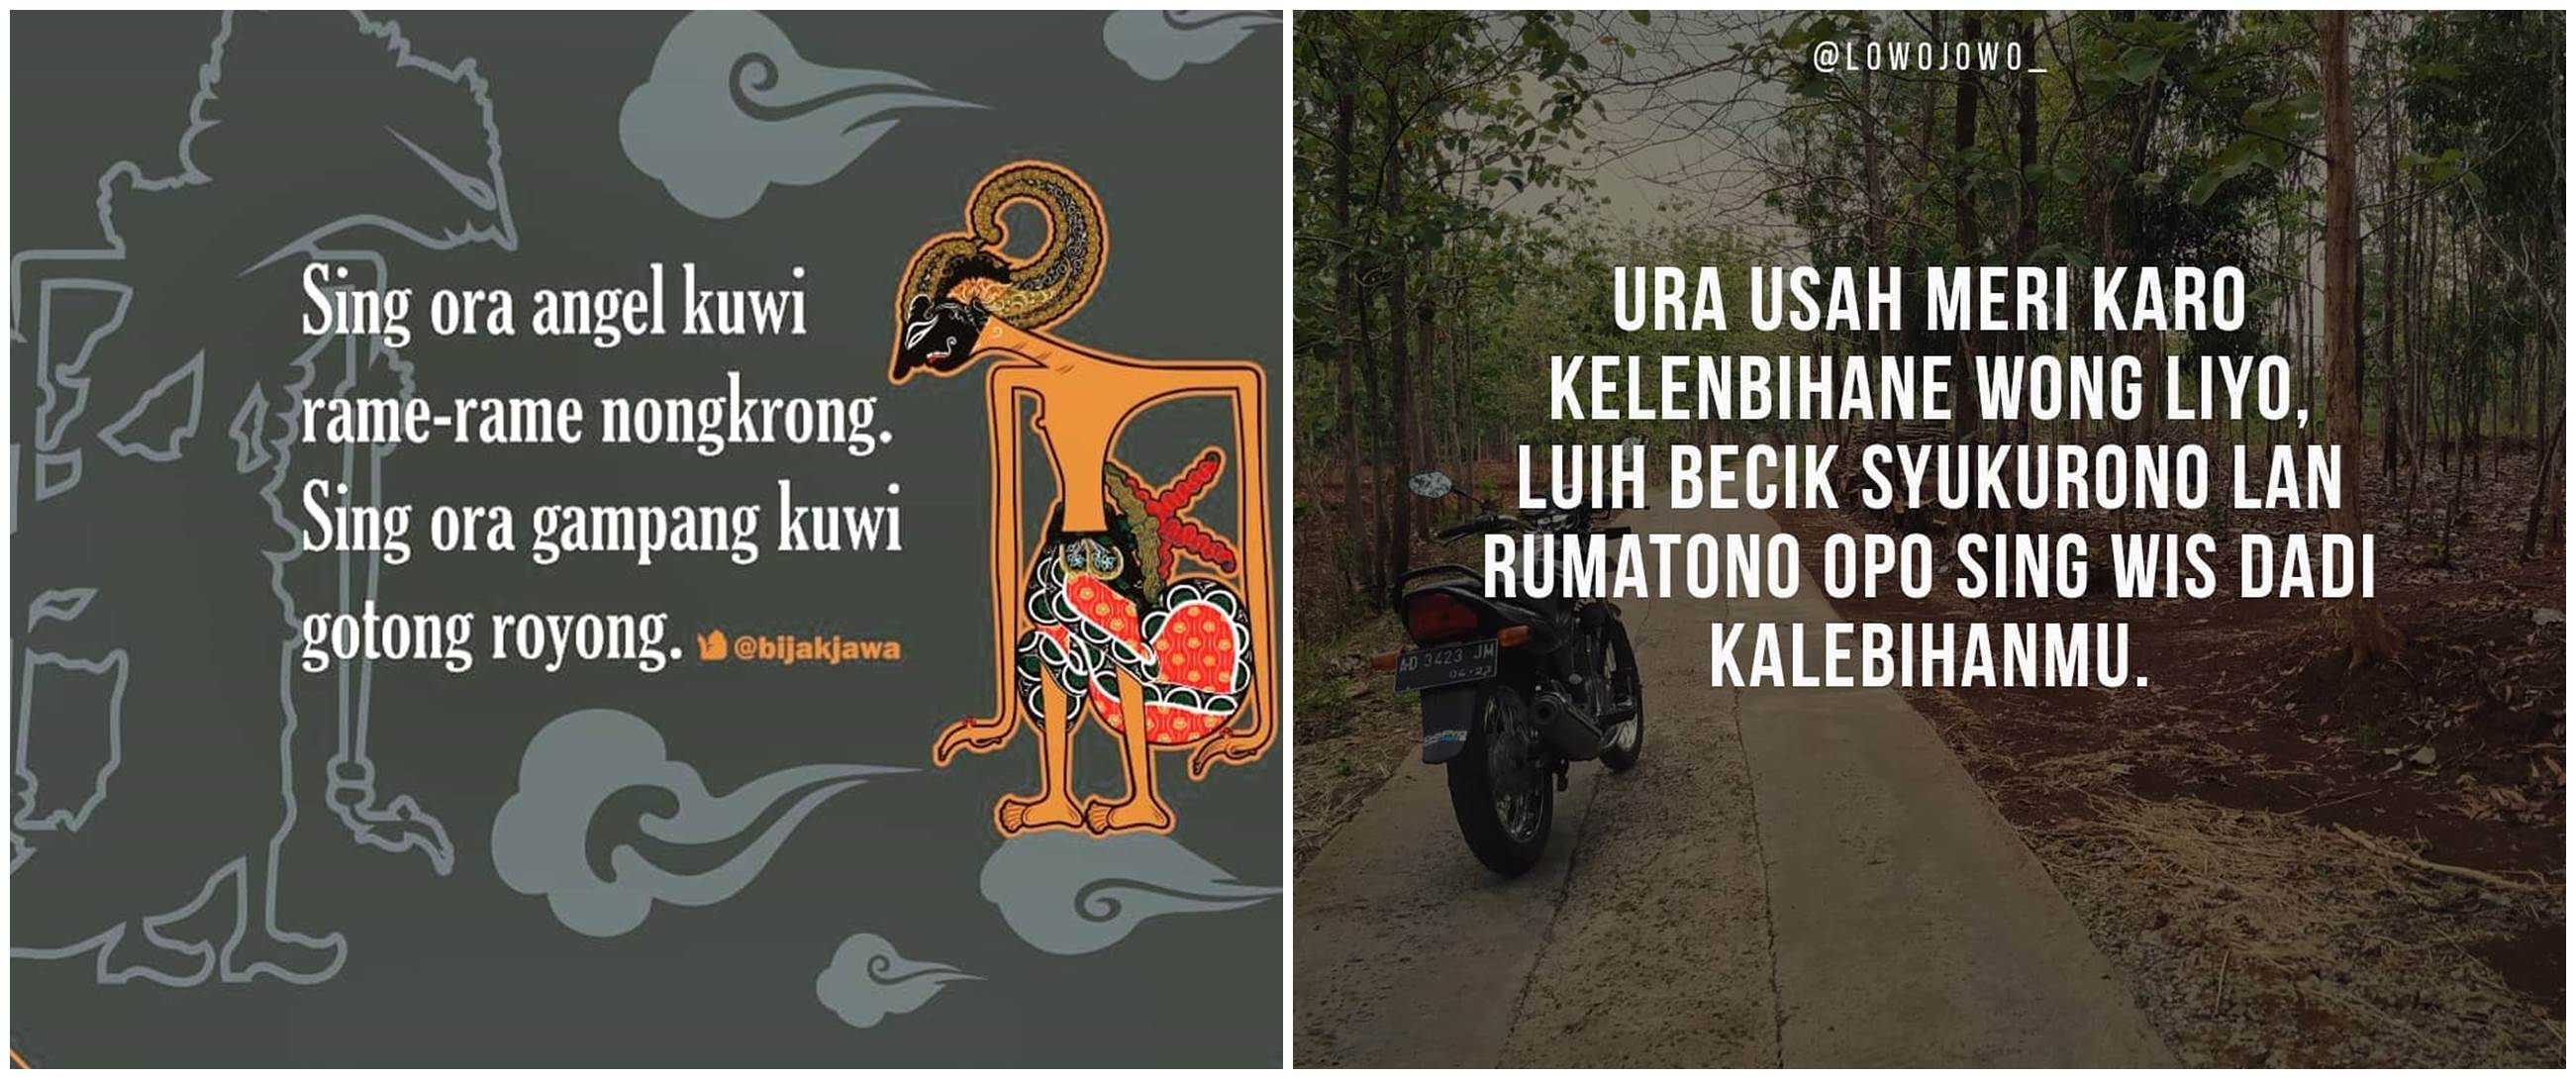 63 Kata Motivasi Hidup Dalam Bahasa Jawa